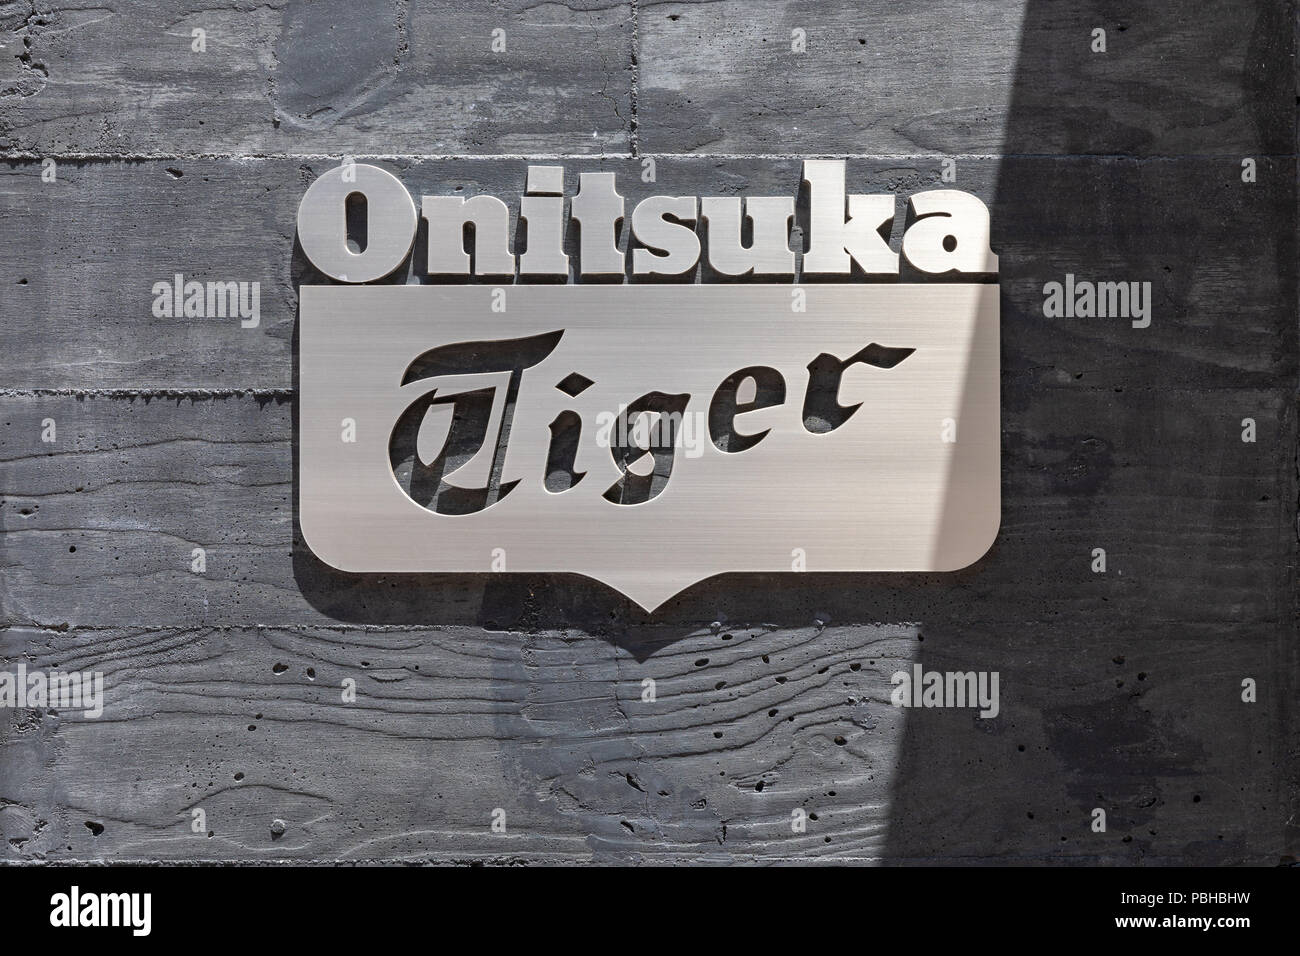 shibuya onitsuka tiger